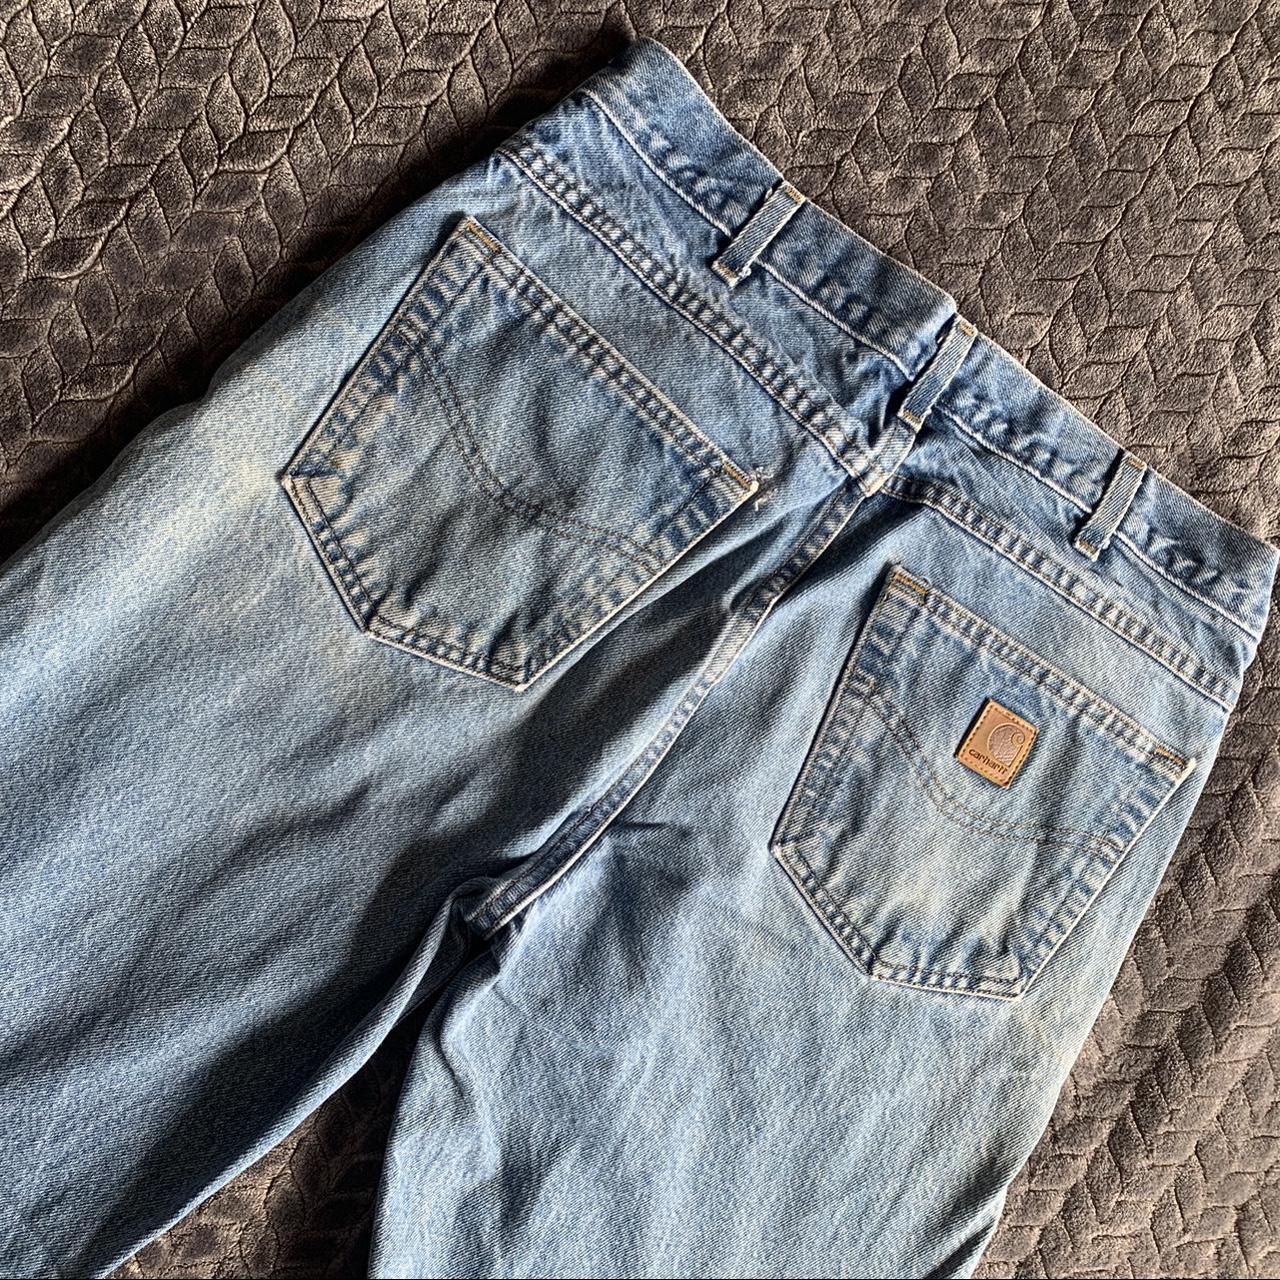 Carhartt Work Jeans Carhartt distressed work jeans,... - Depop